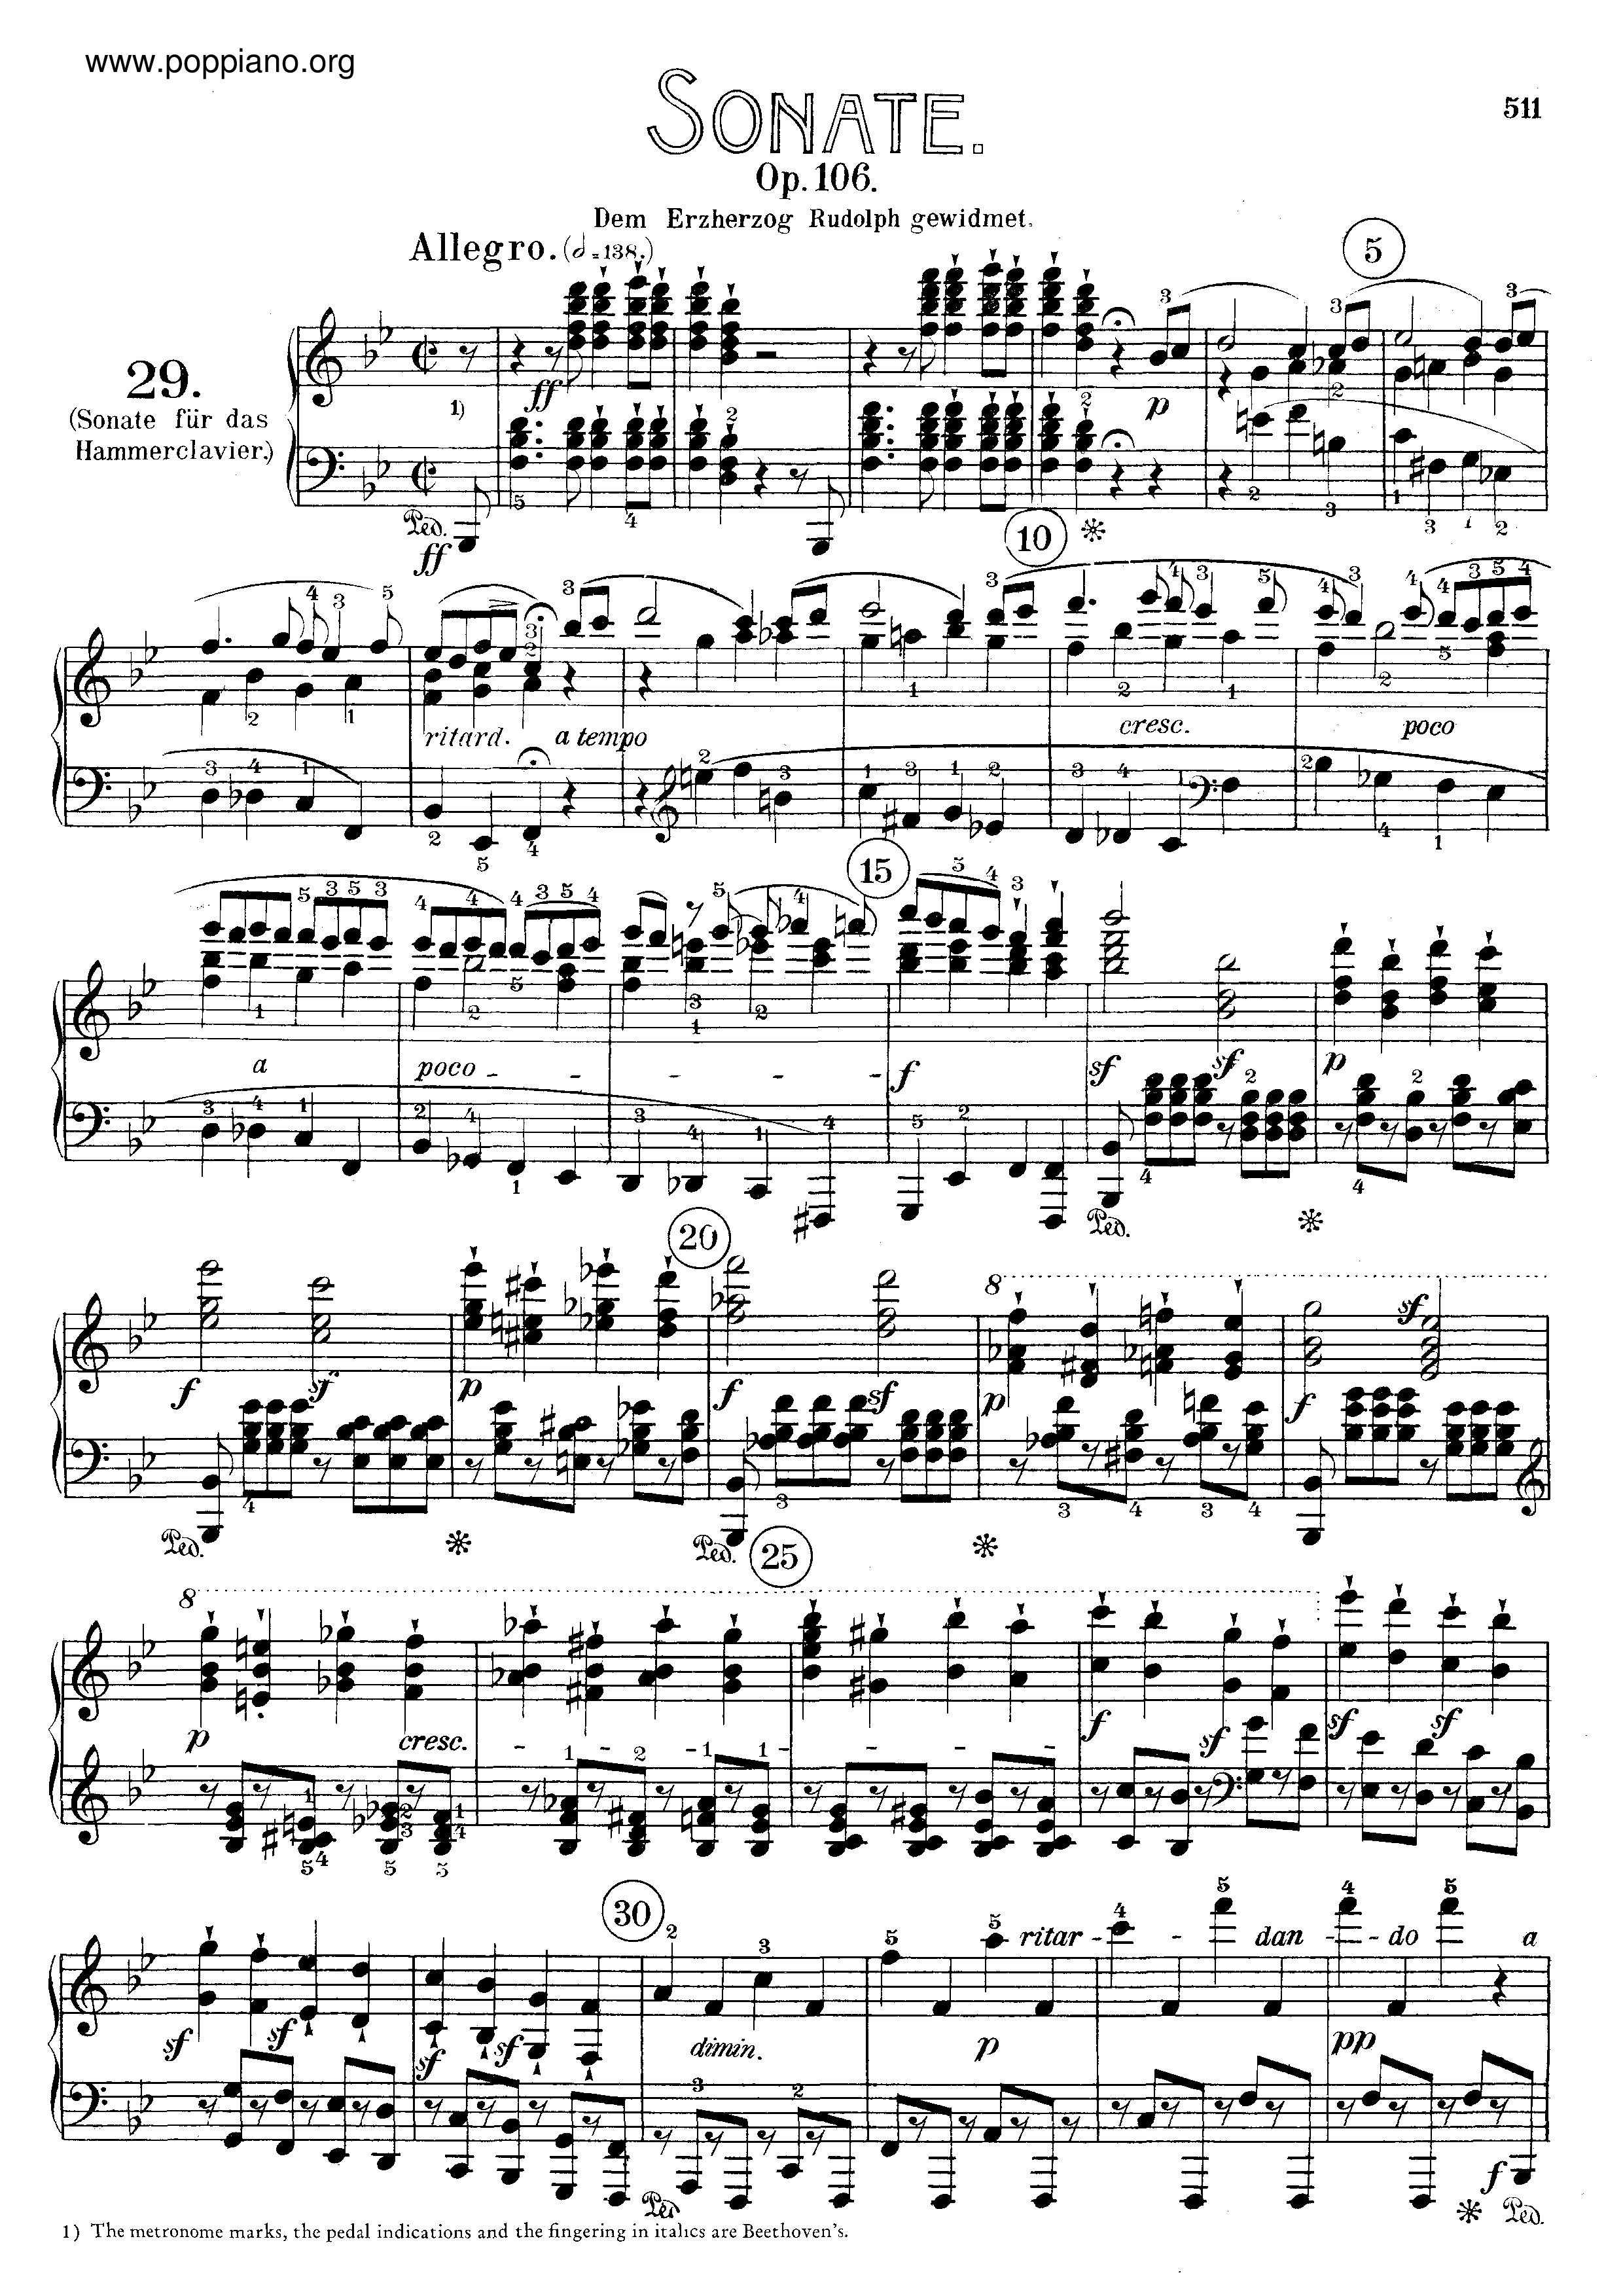 Sonata No. 29 in B-flat major琴谱